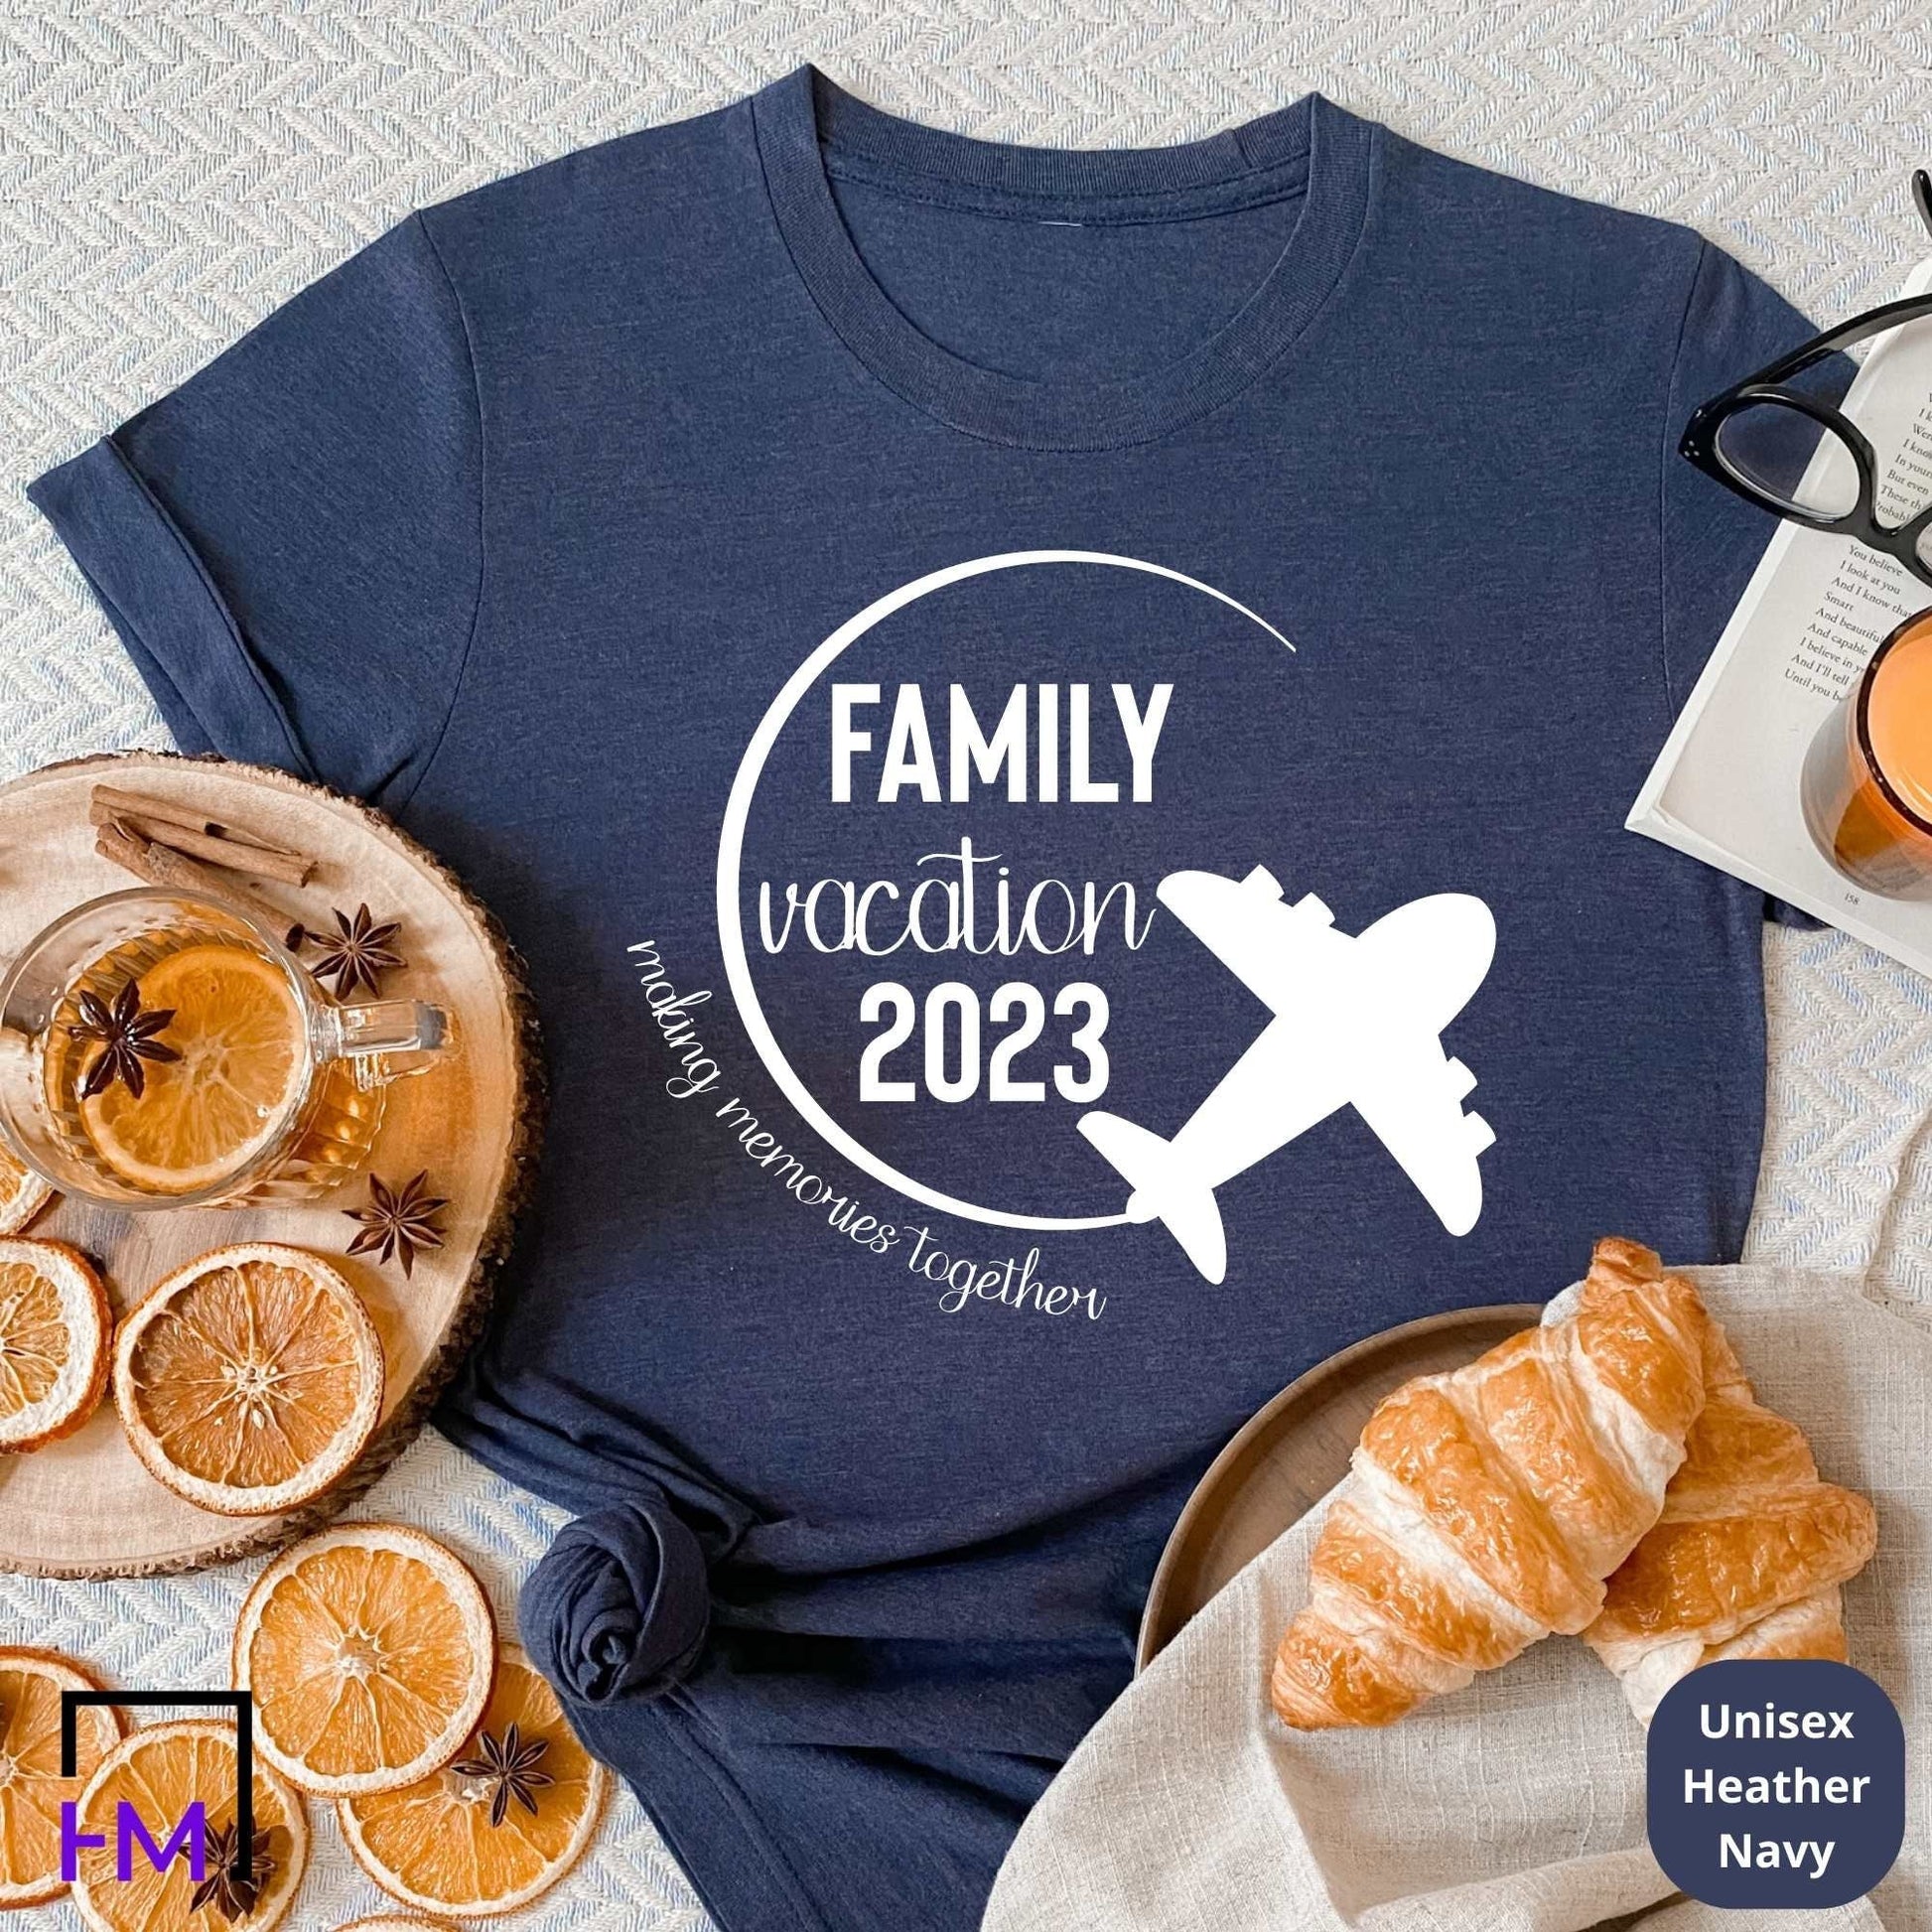 2023 Family Vacation Shirts HMDesignStudioUS